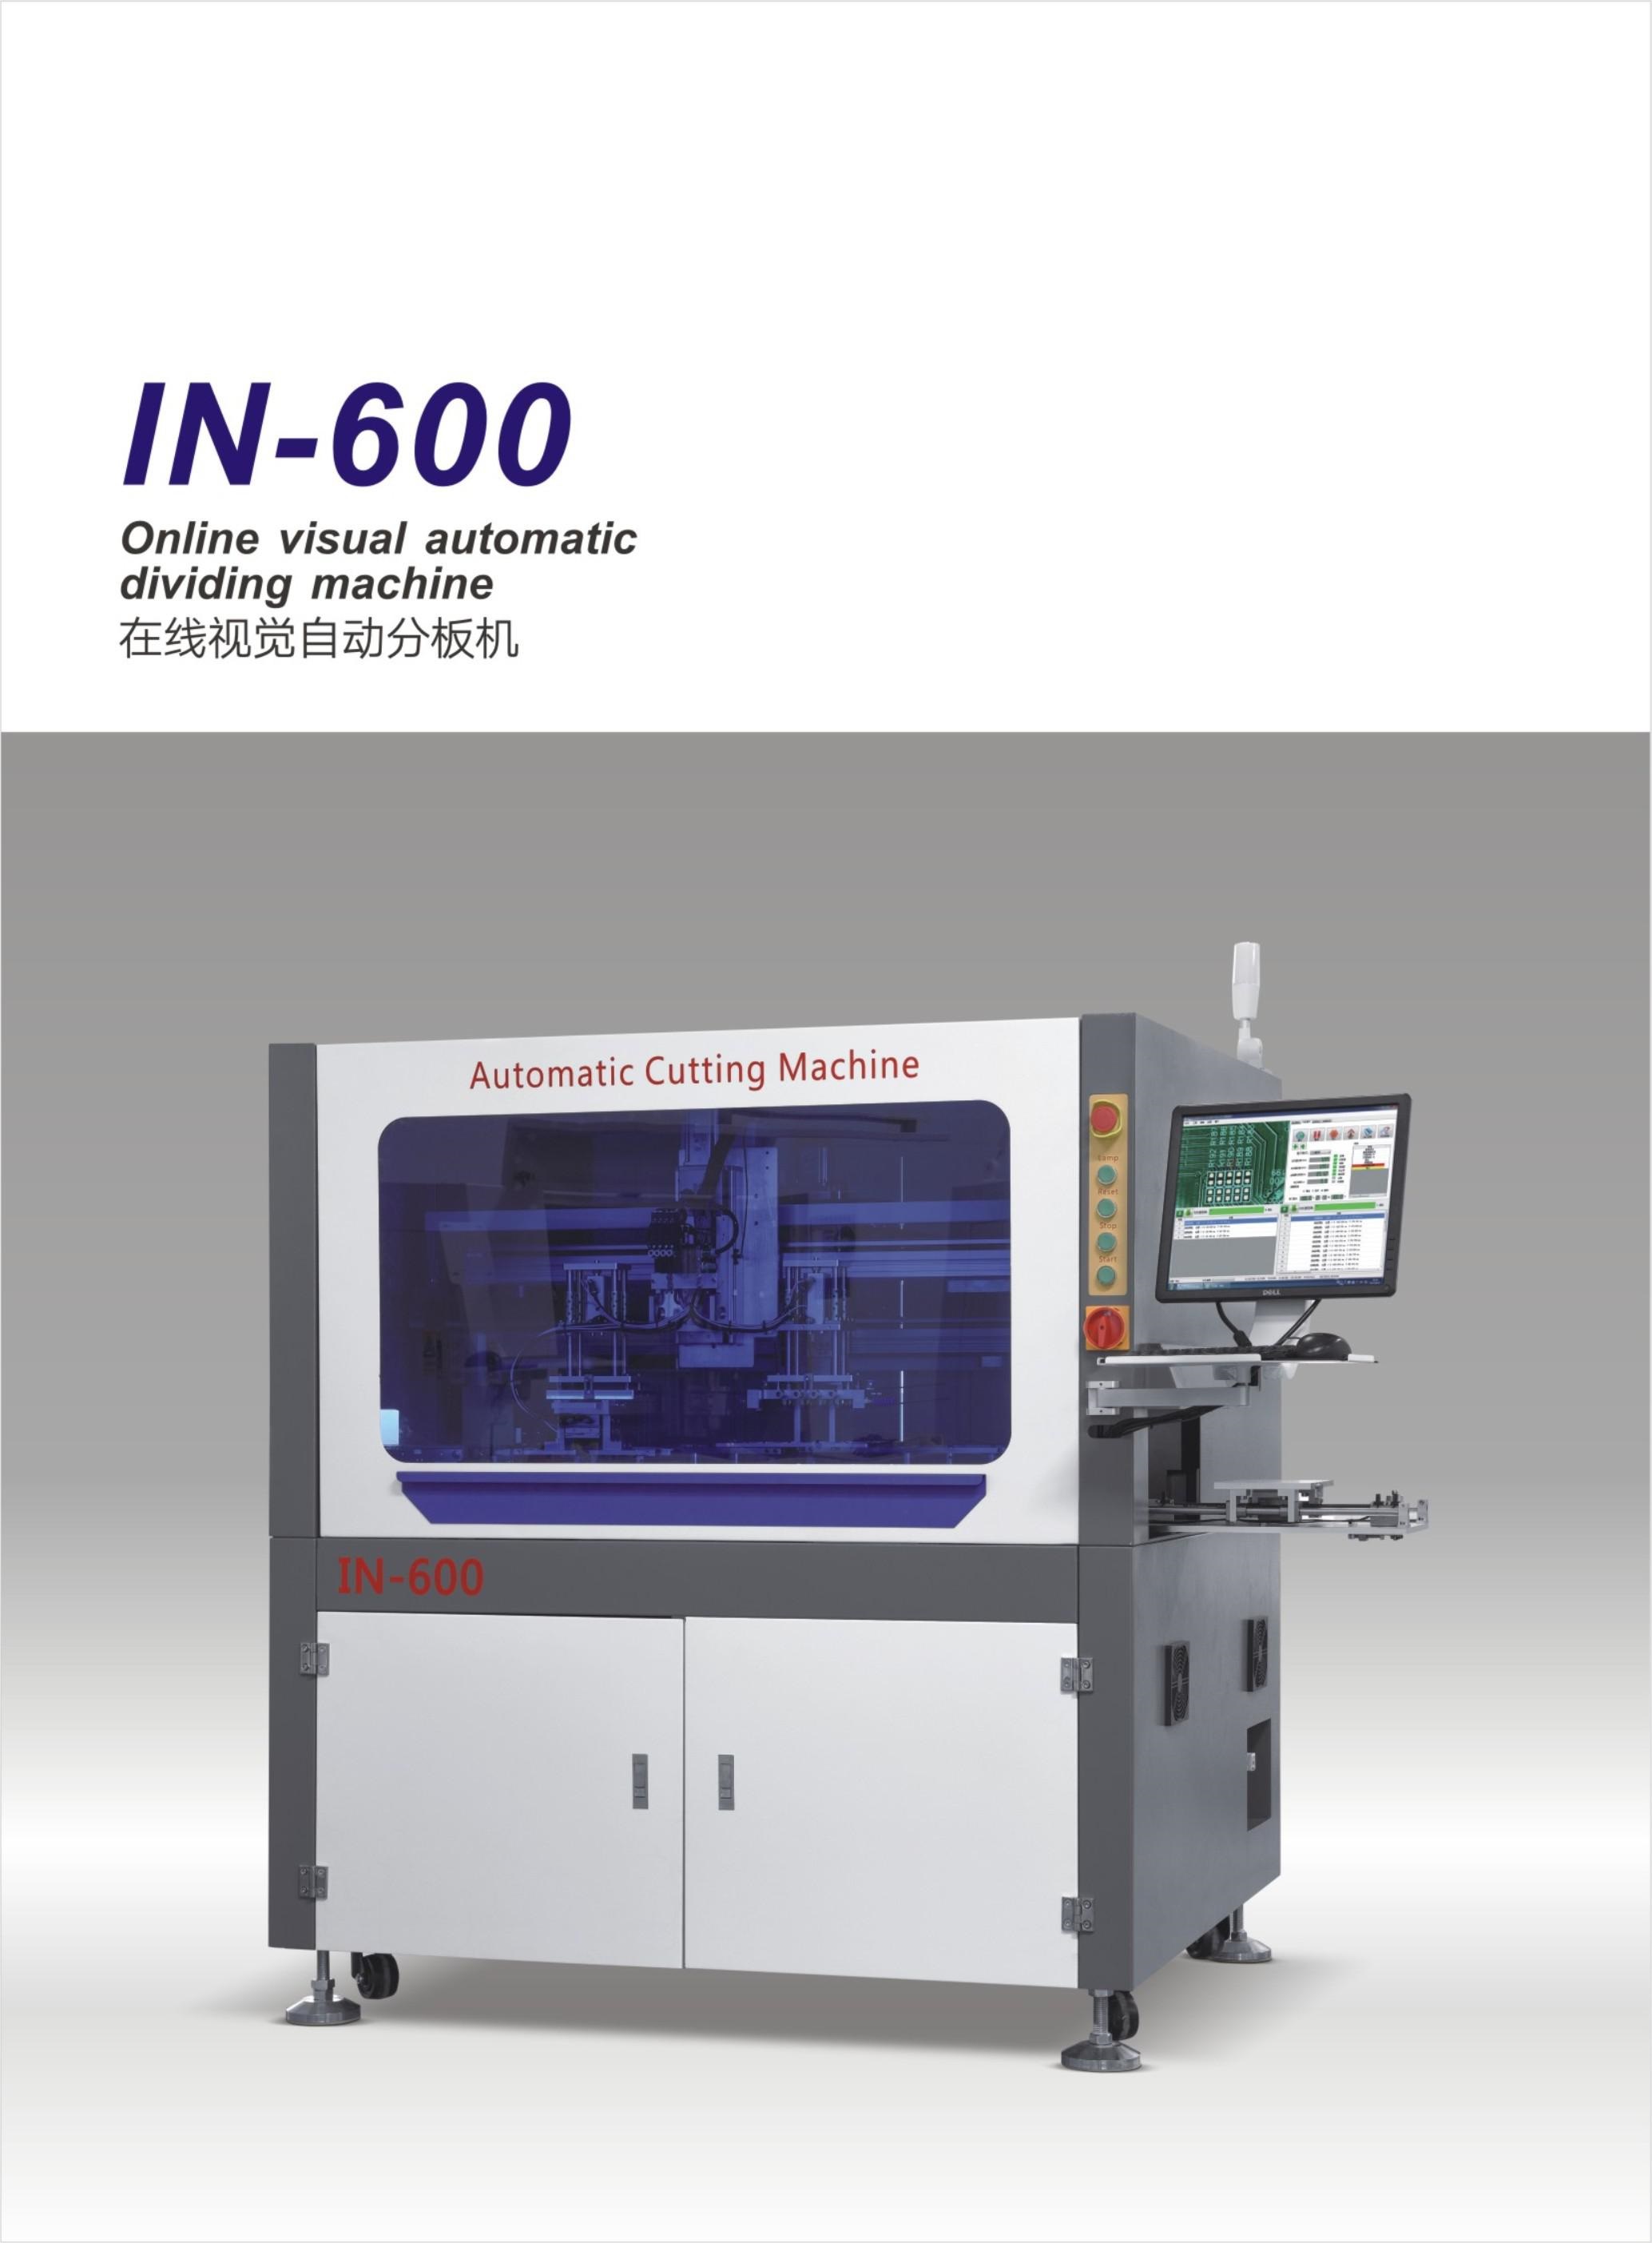 Online visual automatic Cutting machine IN-600